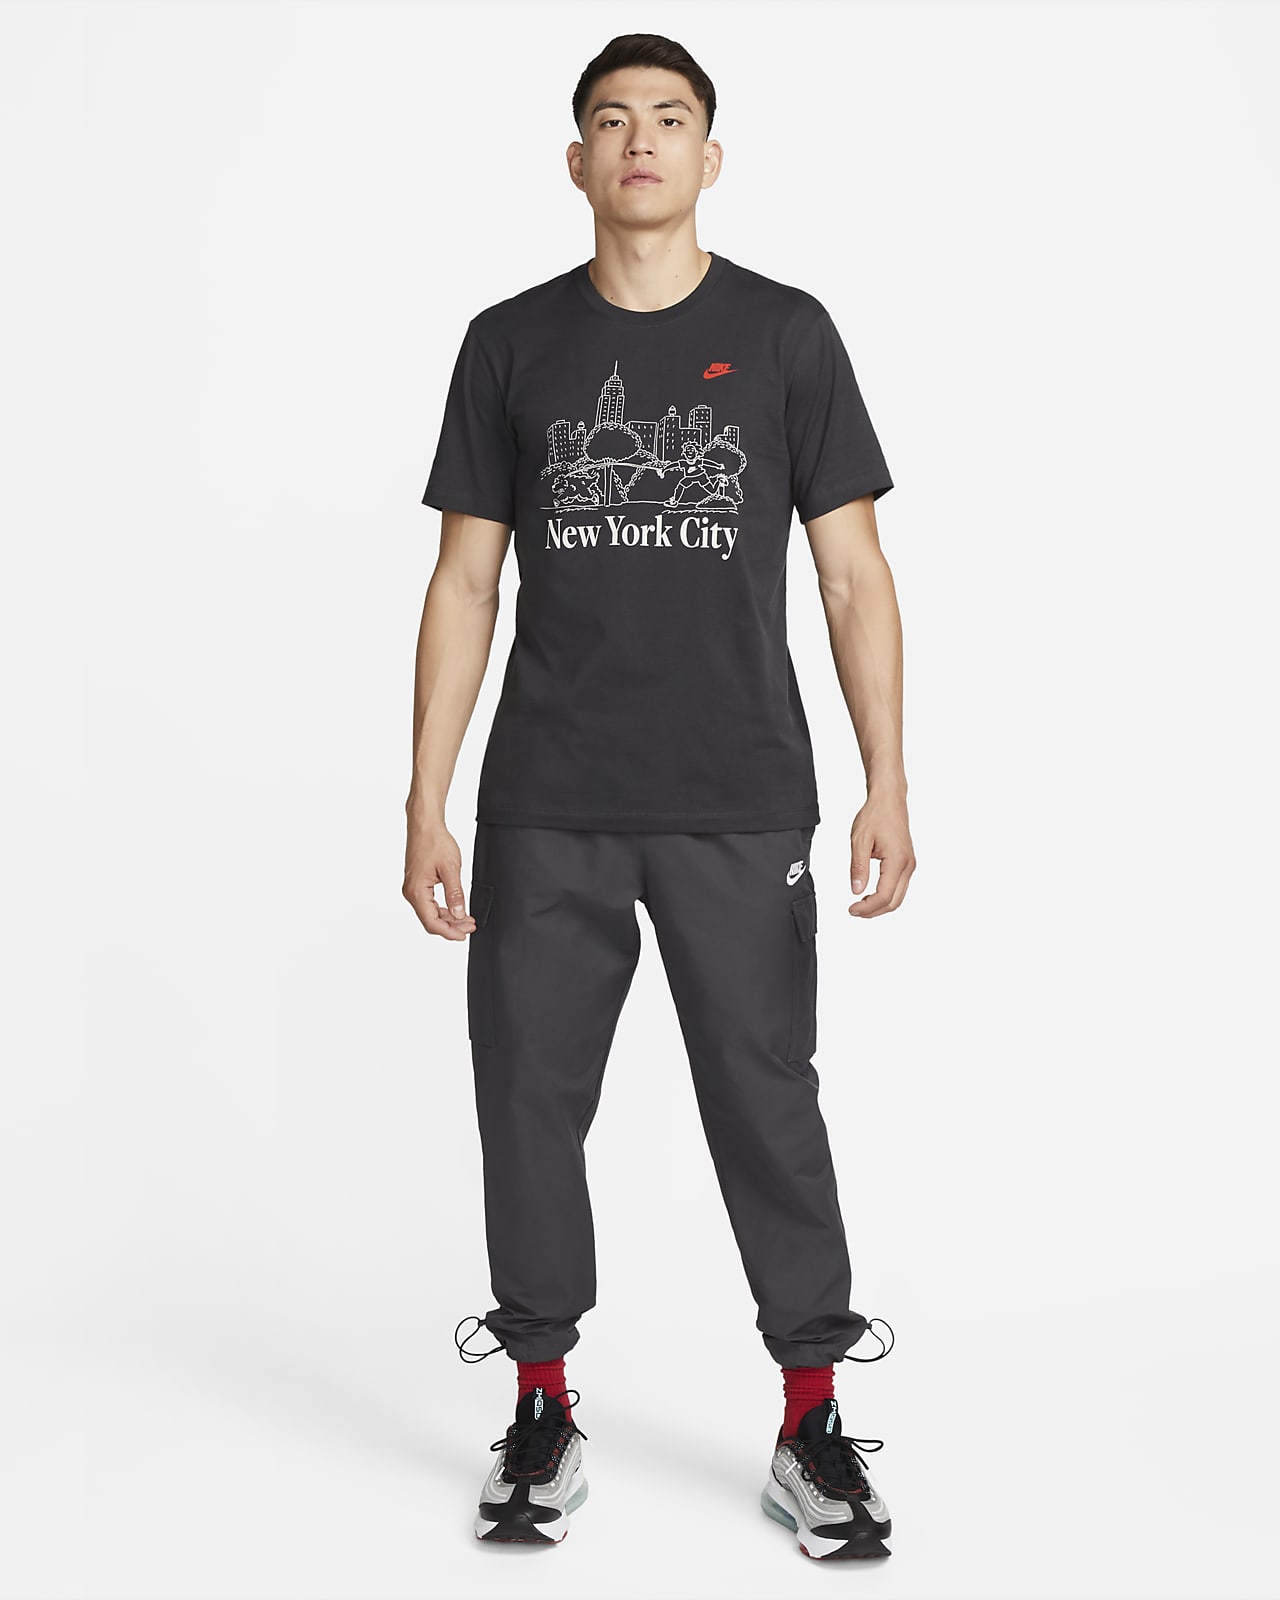 Nike NYC City t-shirt in black